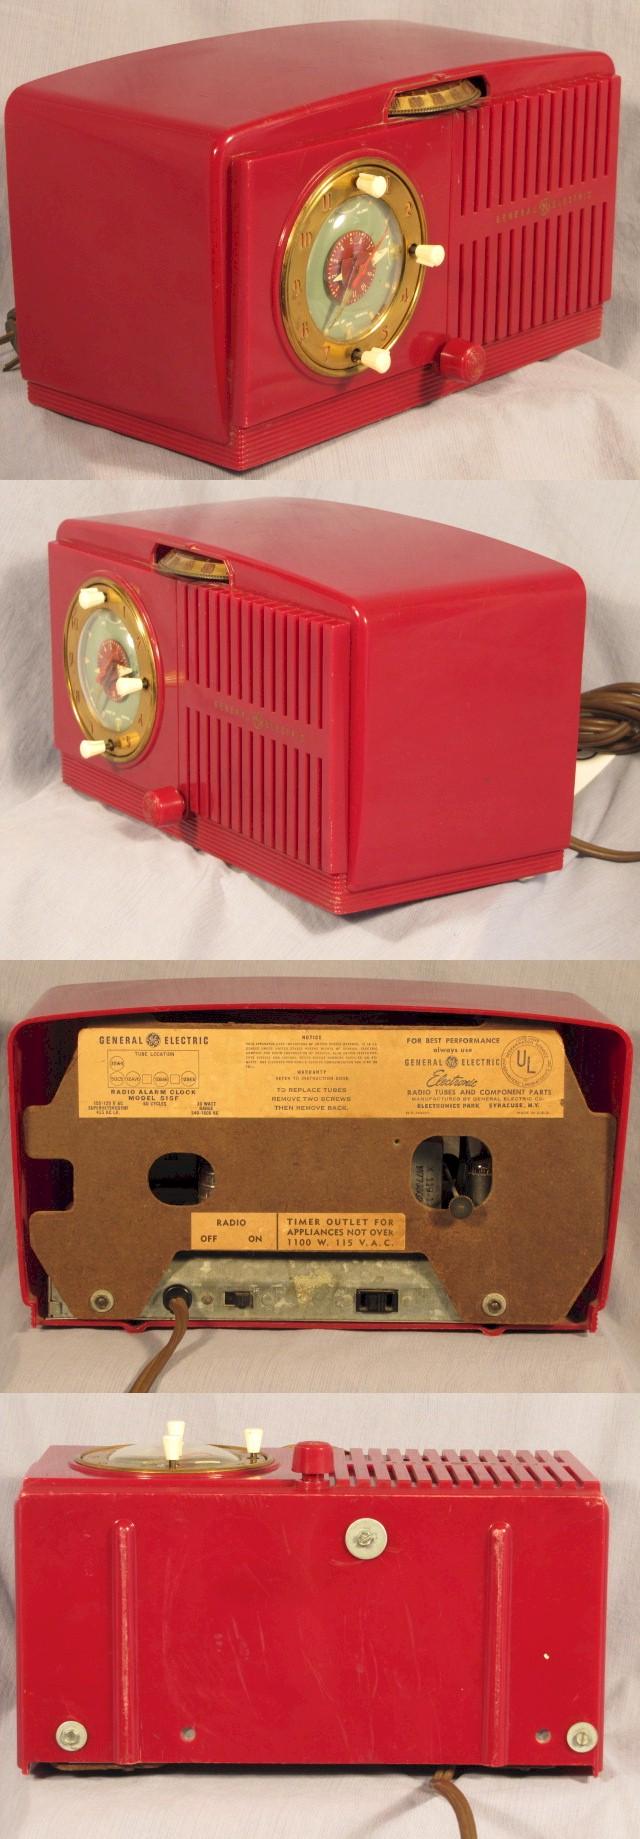 General Electric 515 Clock Radio (mid-1950s)